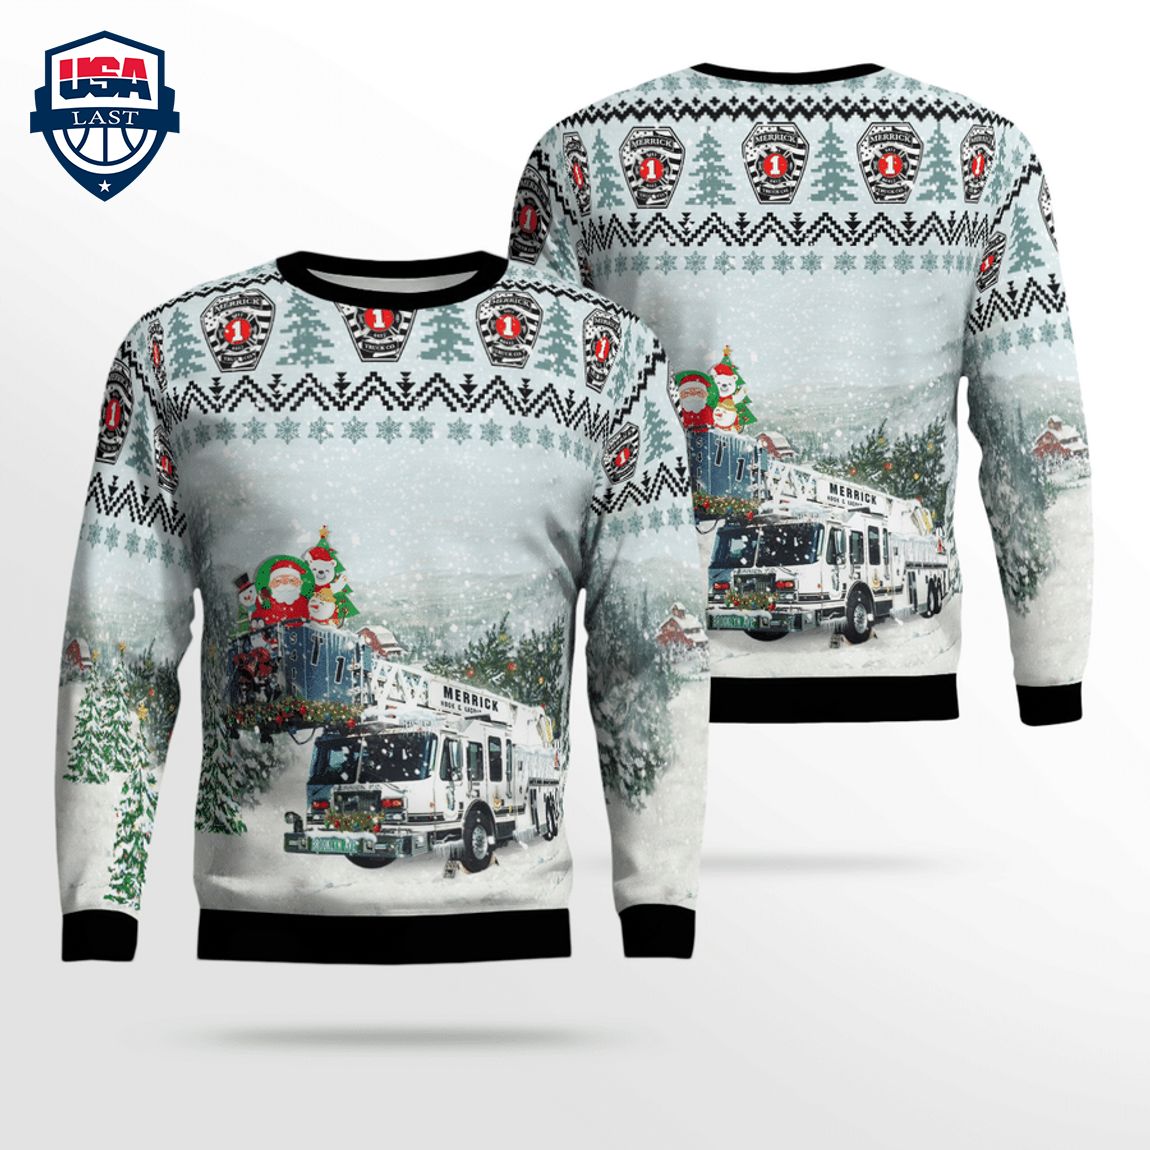 Merrick Truck Co. 1 3D Christmas Sweater